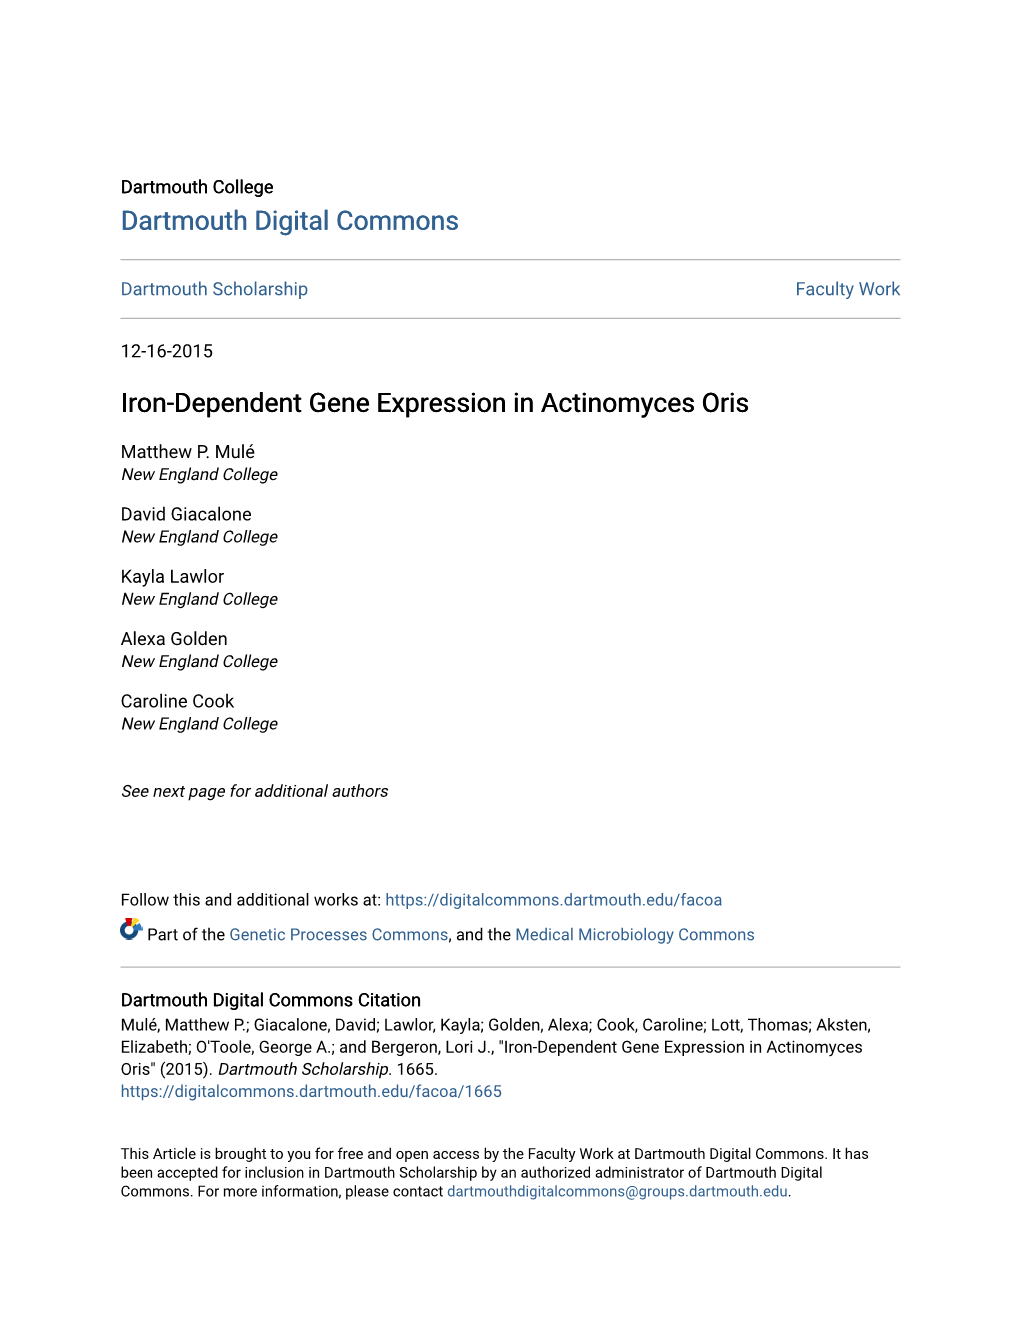 Iron-Dependent Gene Expression in Actinomyces Oris